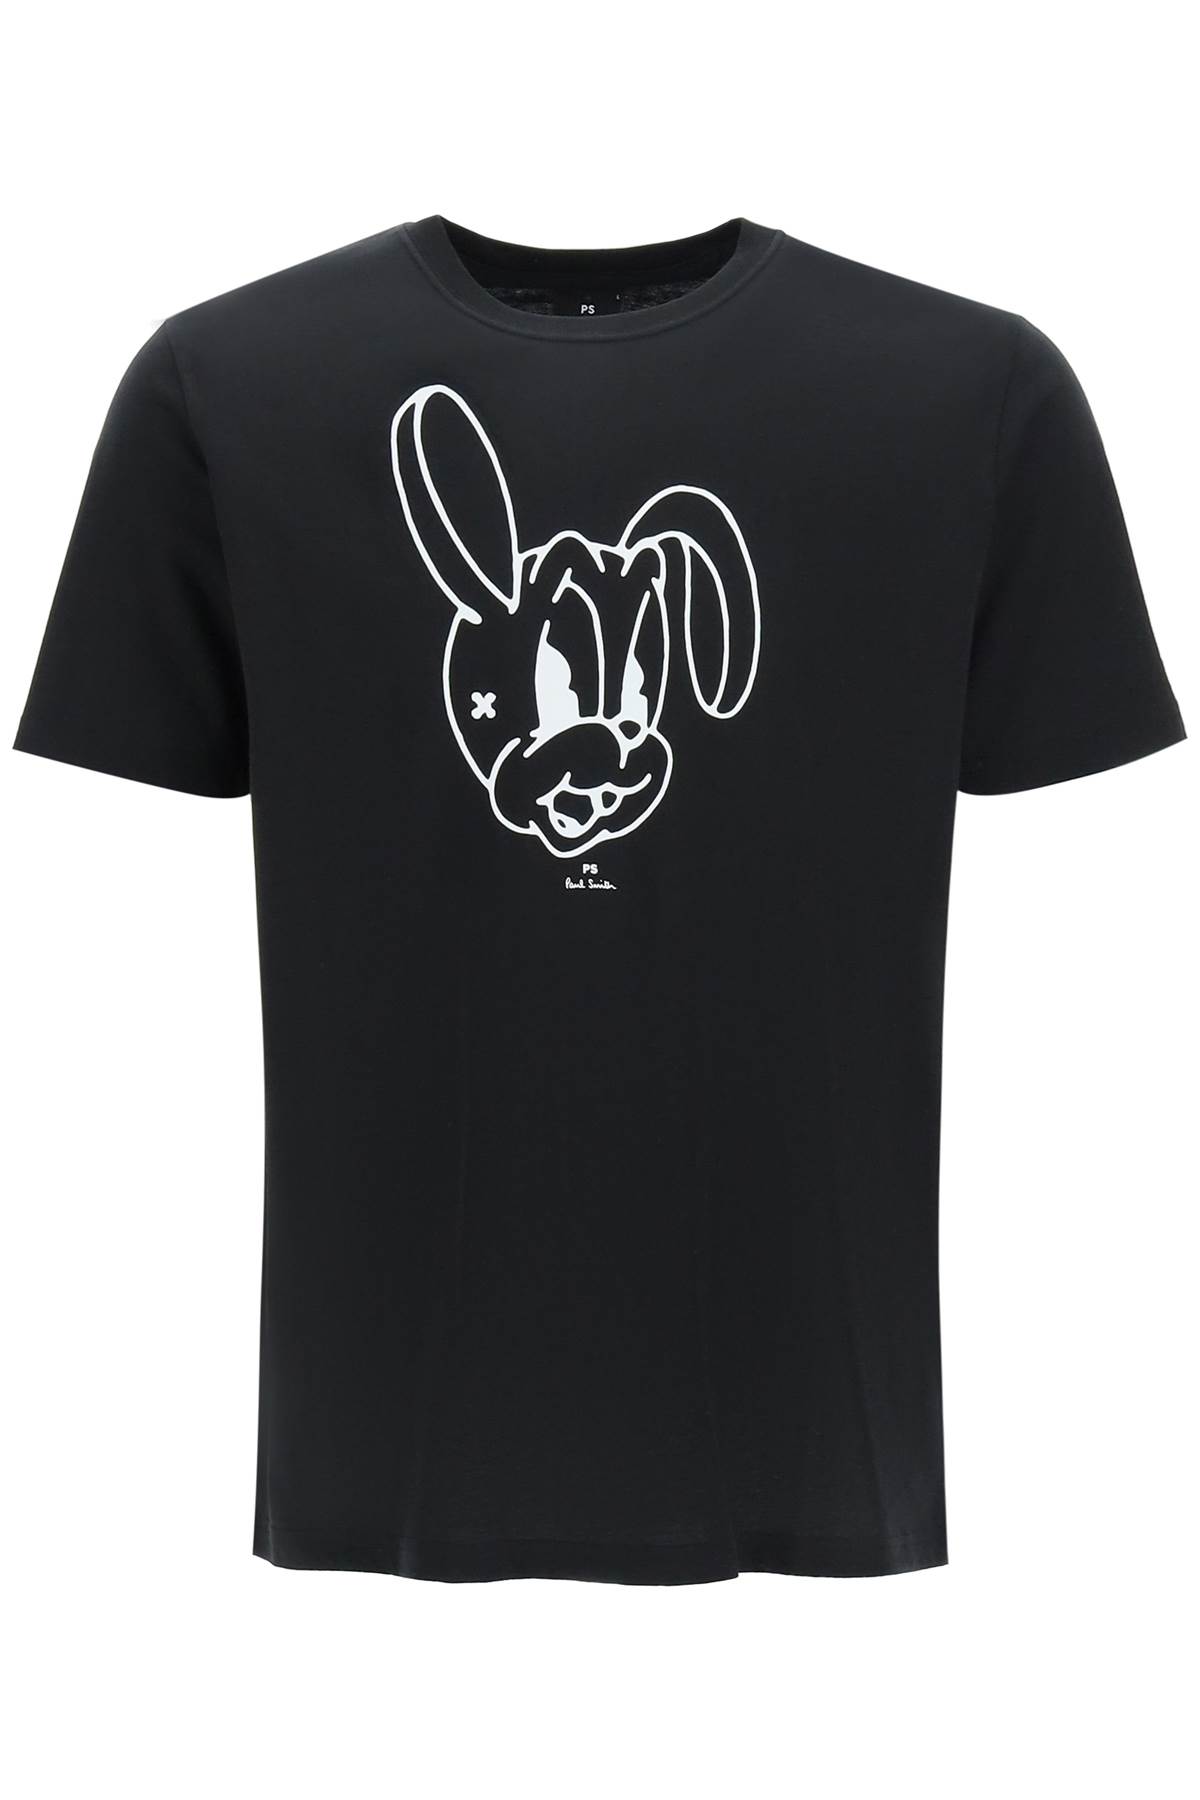 PS by Paul Smith rabbit Organic Cotton T-shirt